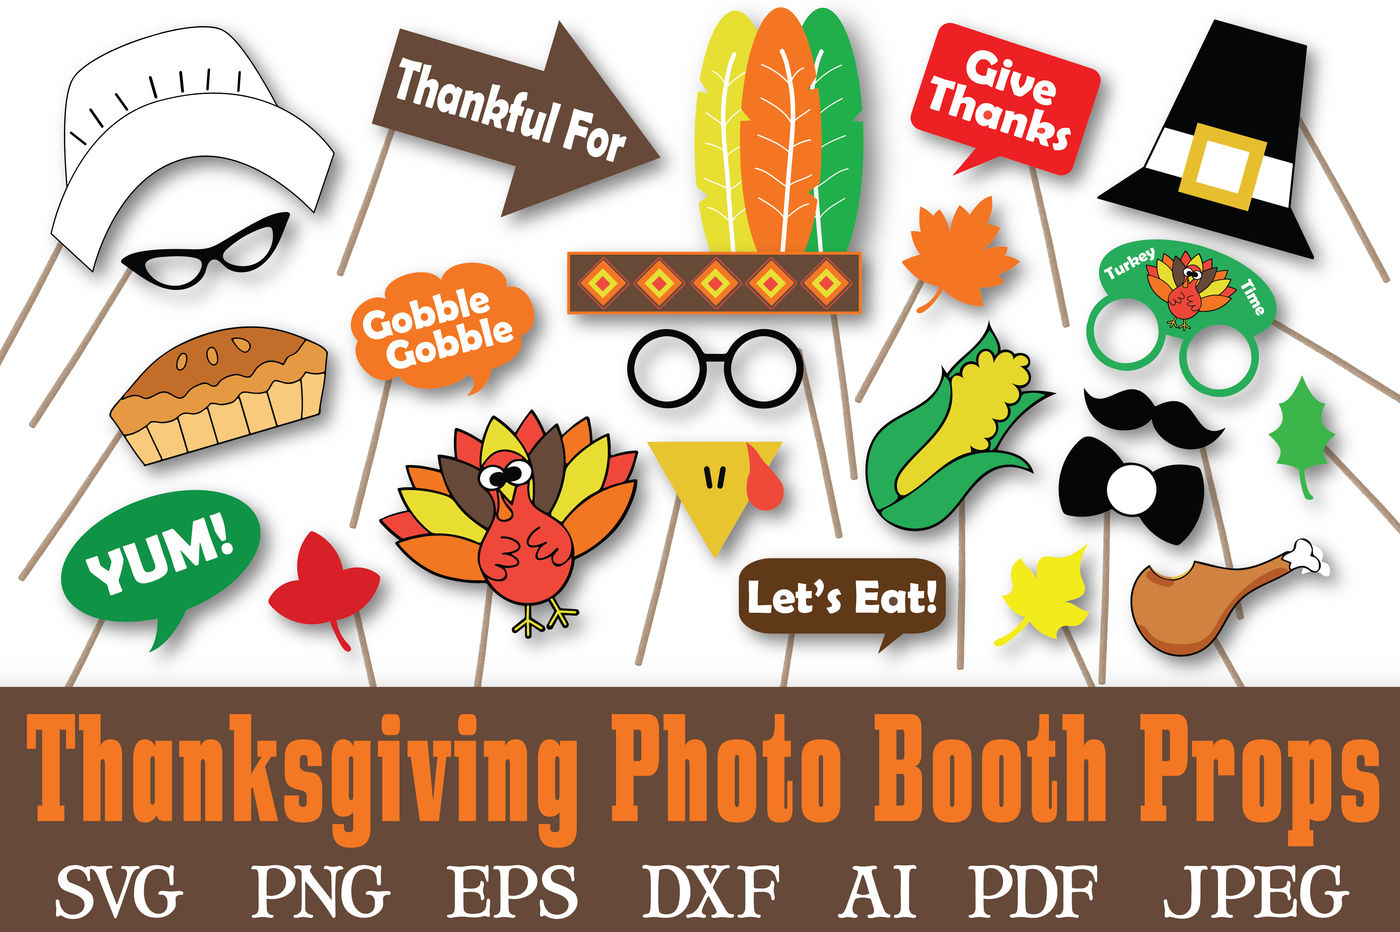 Thanksgiving Photo Booth Props Svg Cut Files Dxf Png Jpeg Pdf Eps Ai By Shannon Keyser Thehungryjpeg Com